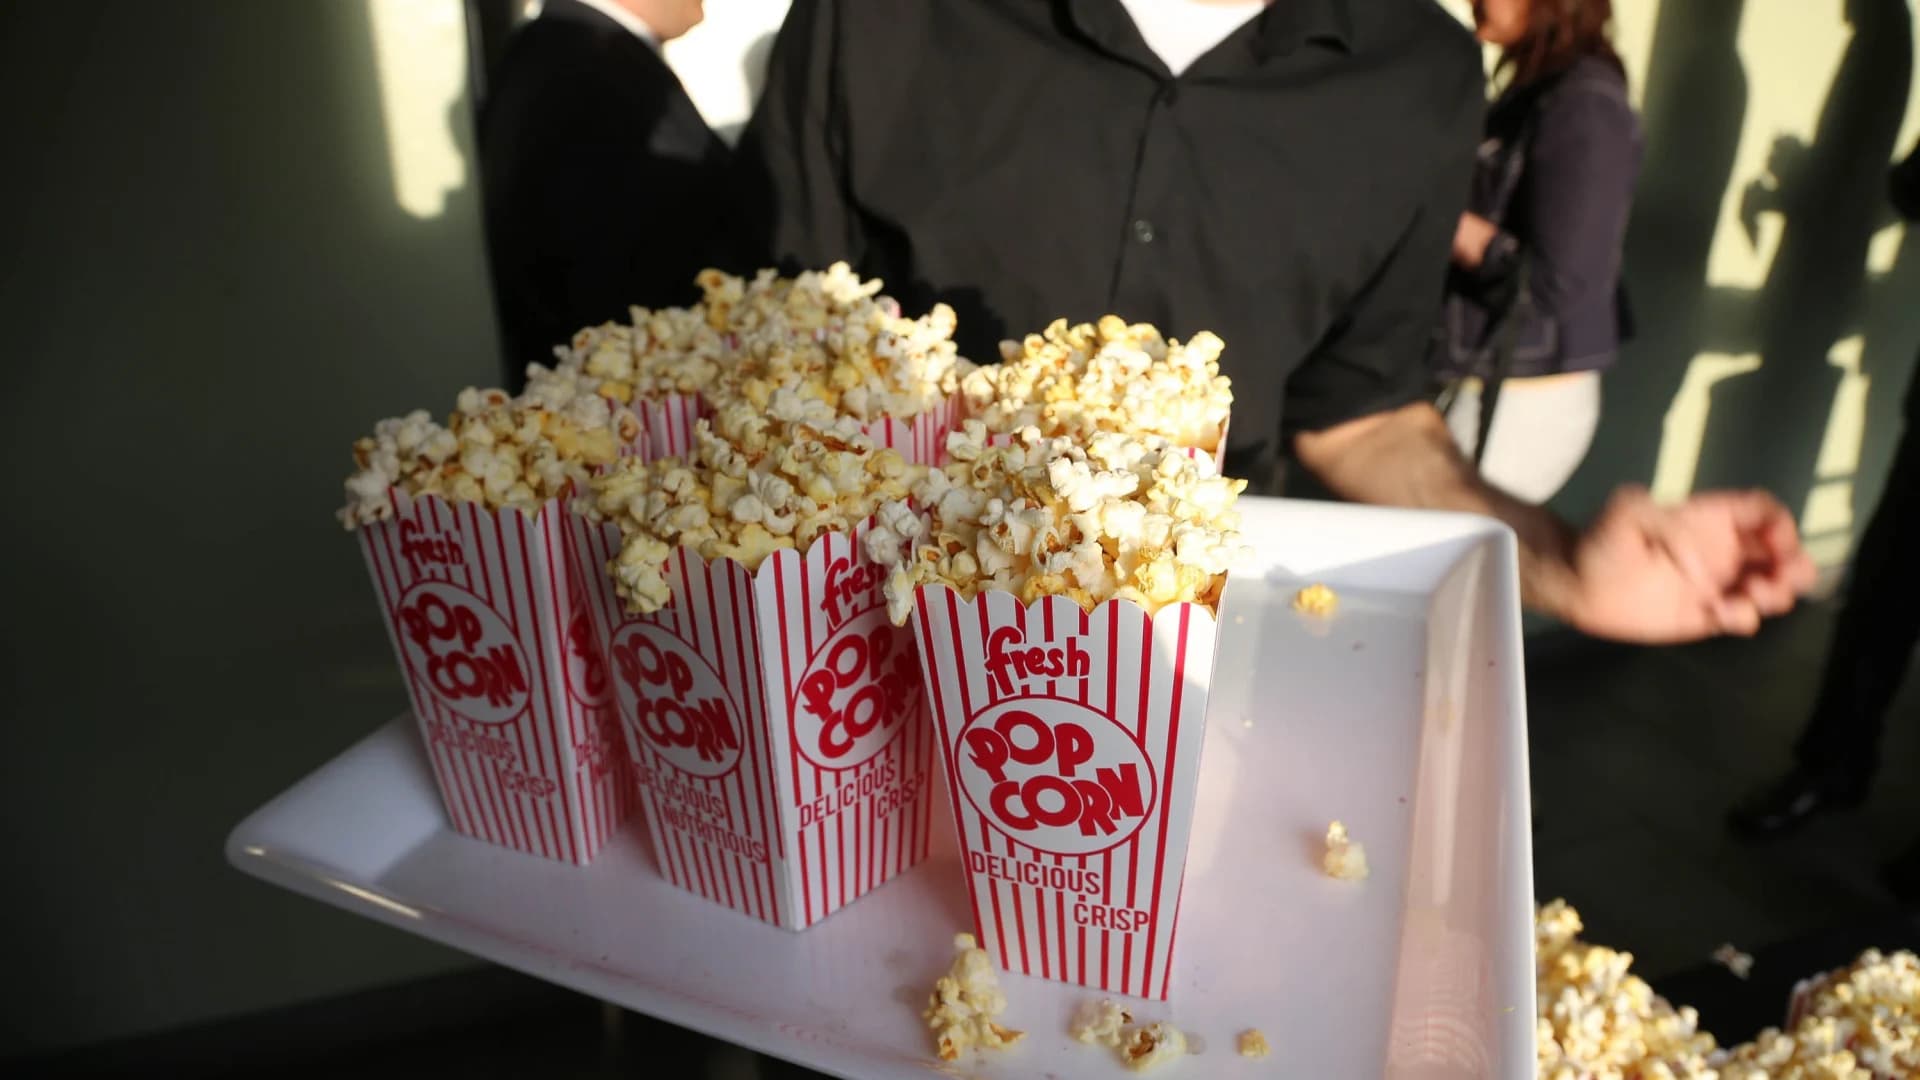 Poll: National Popcorn Day